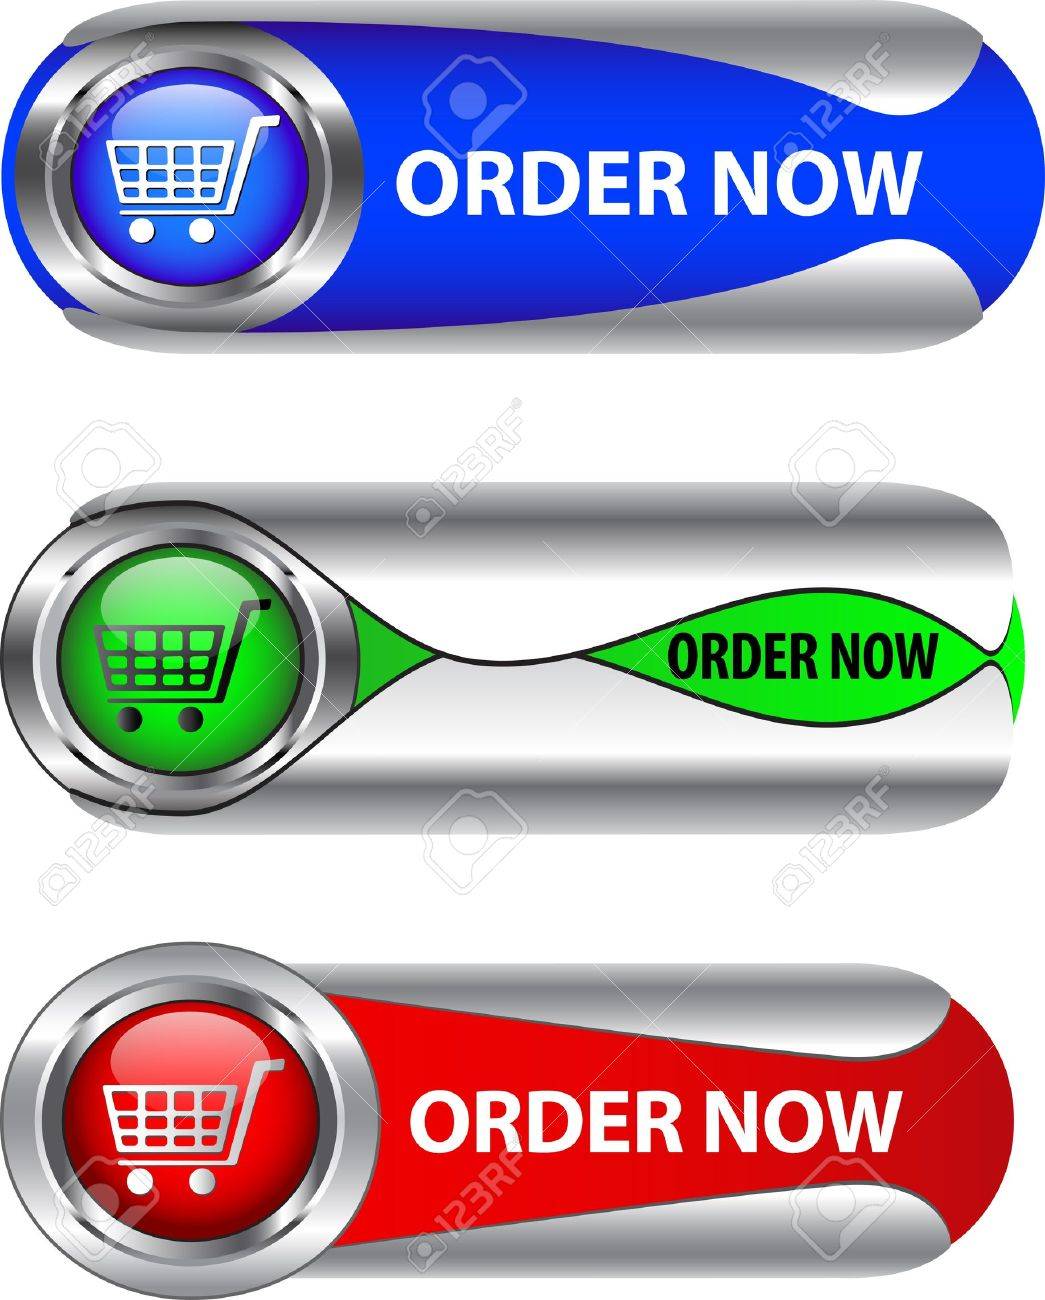 Metallic order now button/icon set for web applications. Stock Vector -  12367829